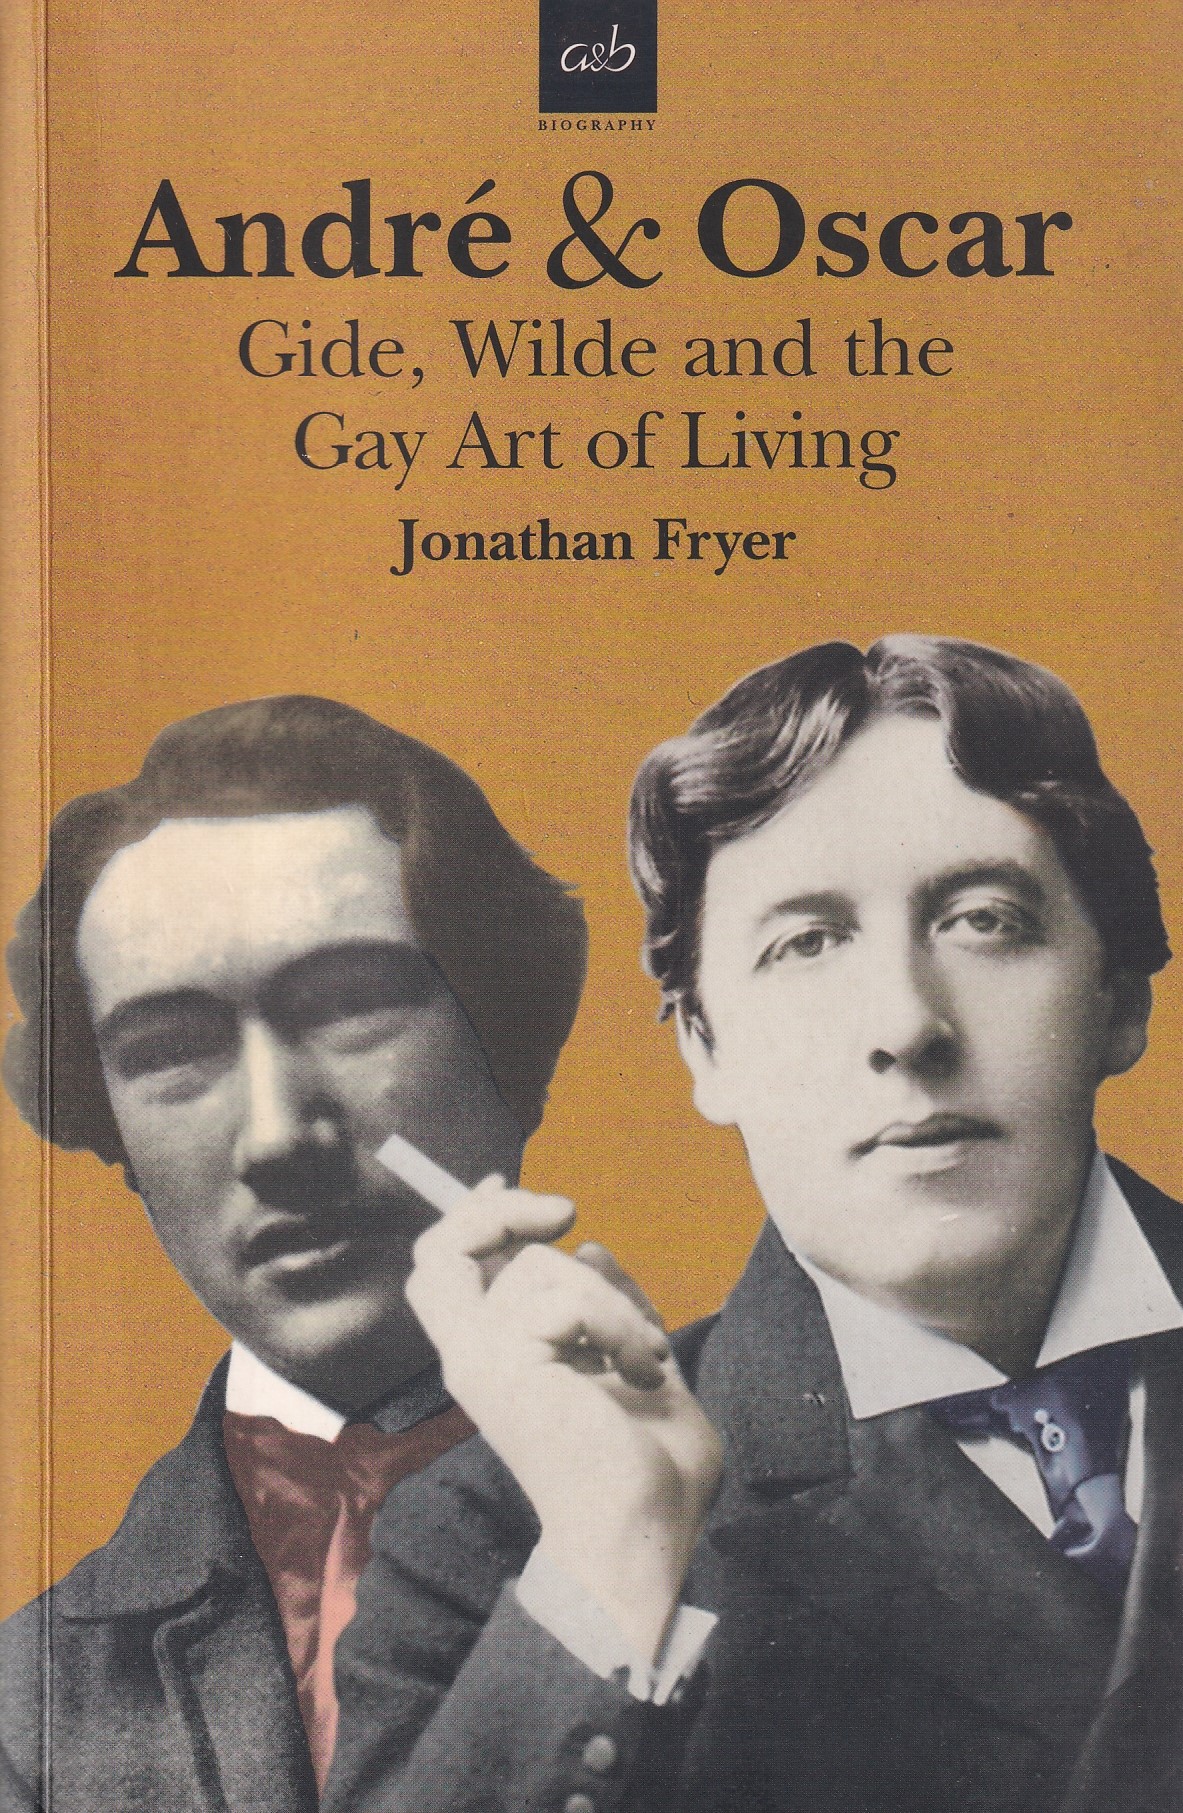 André & Oscar: Gide, Wilde and the Gay Art of Living | Jonathan Fryer | Charlie Byrne's